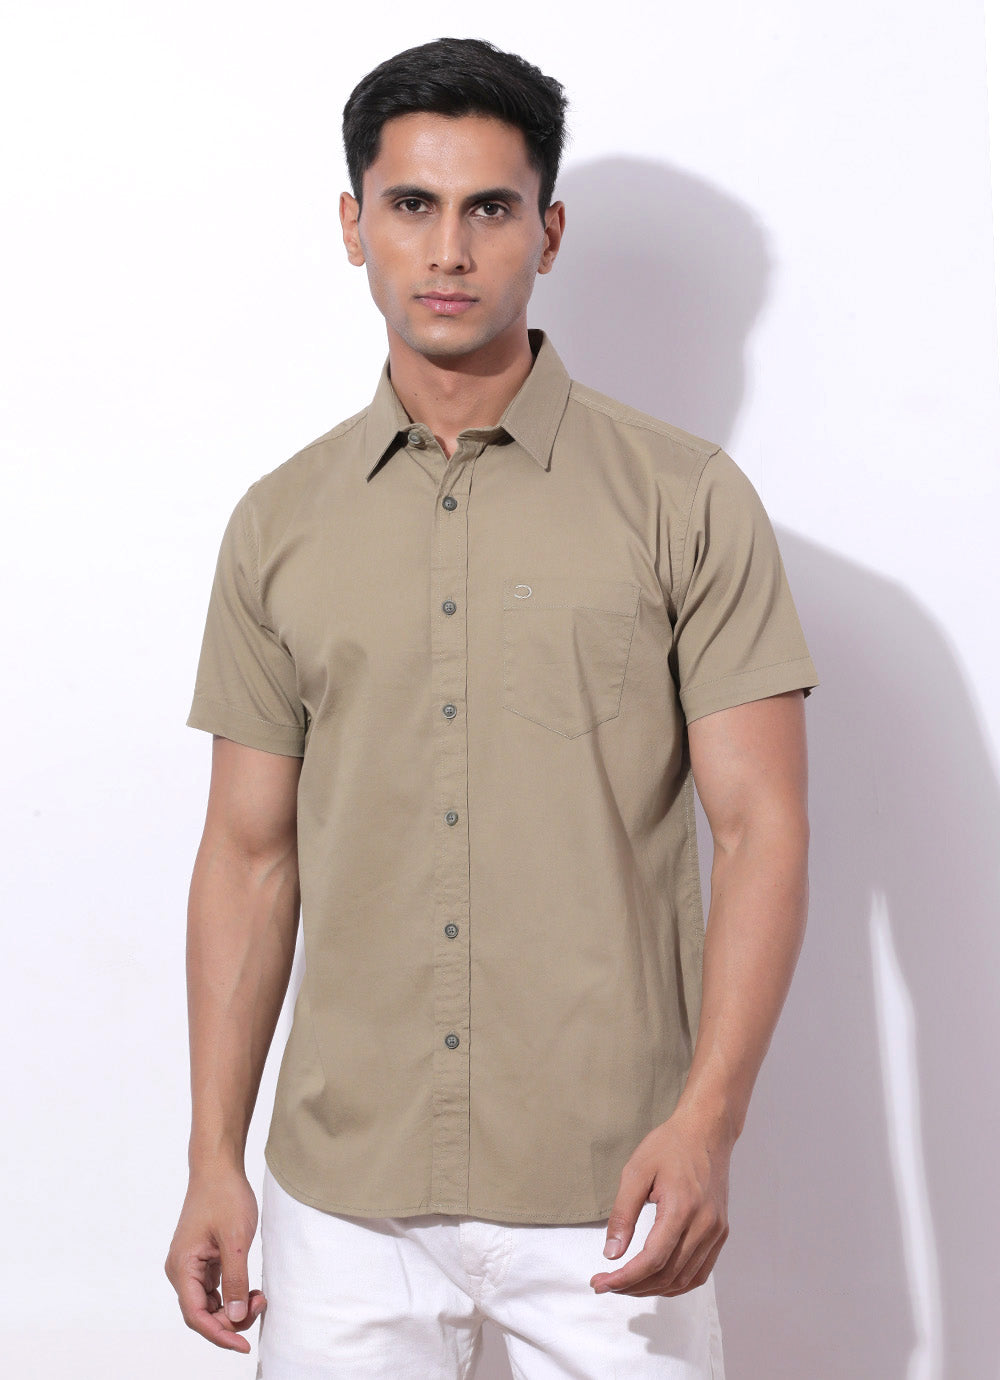 K-Mod Khaki- A Slim Fit Cotton Shirt With Single Patch Pocket.